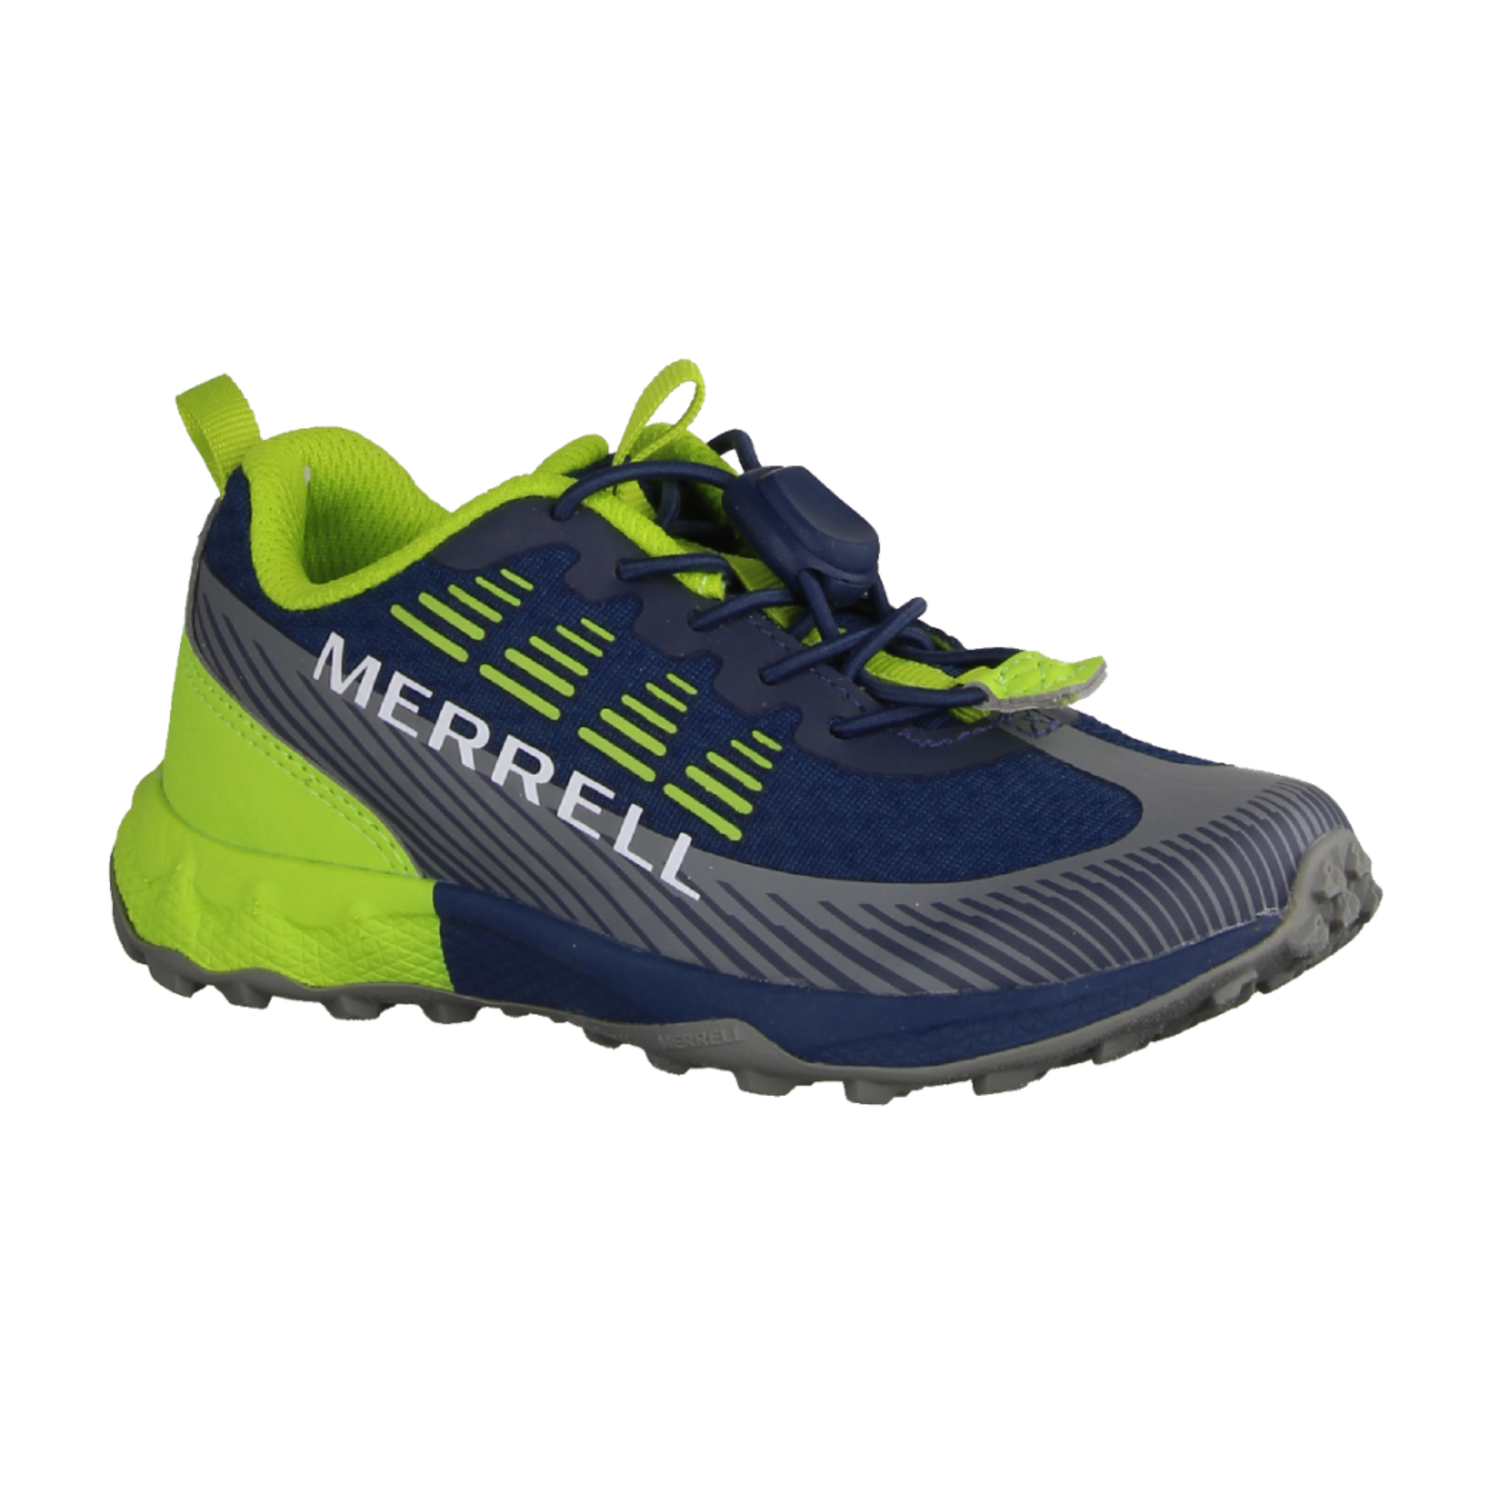 Merrell Agility Peak Juungenschuhe, Barfußschuh, Sneaker, Textil, Lime/Blue/Grey